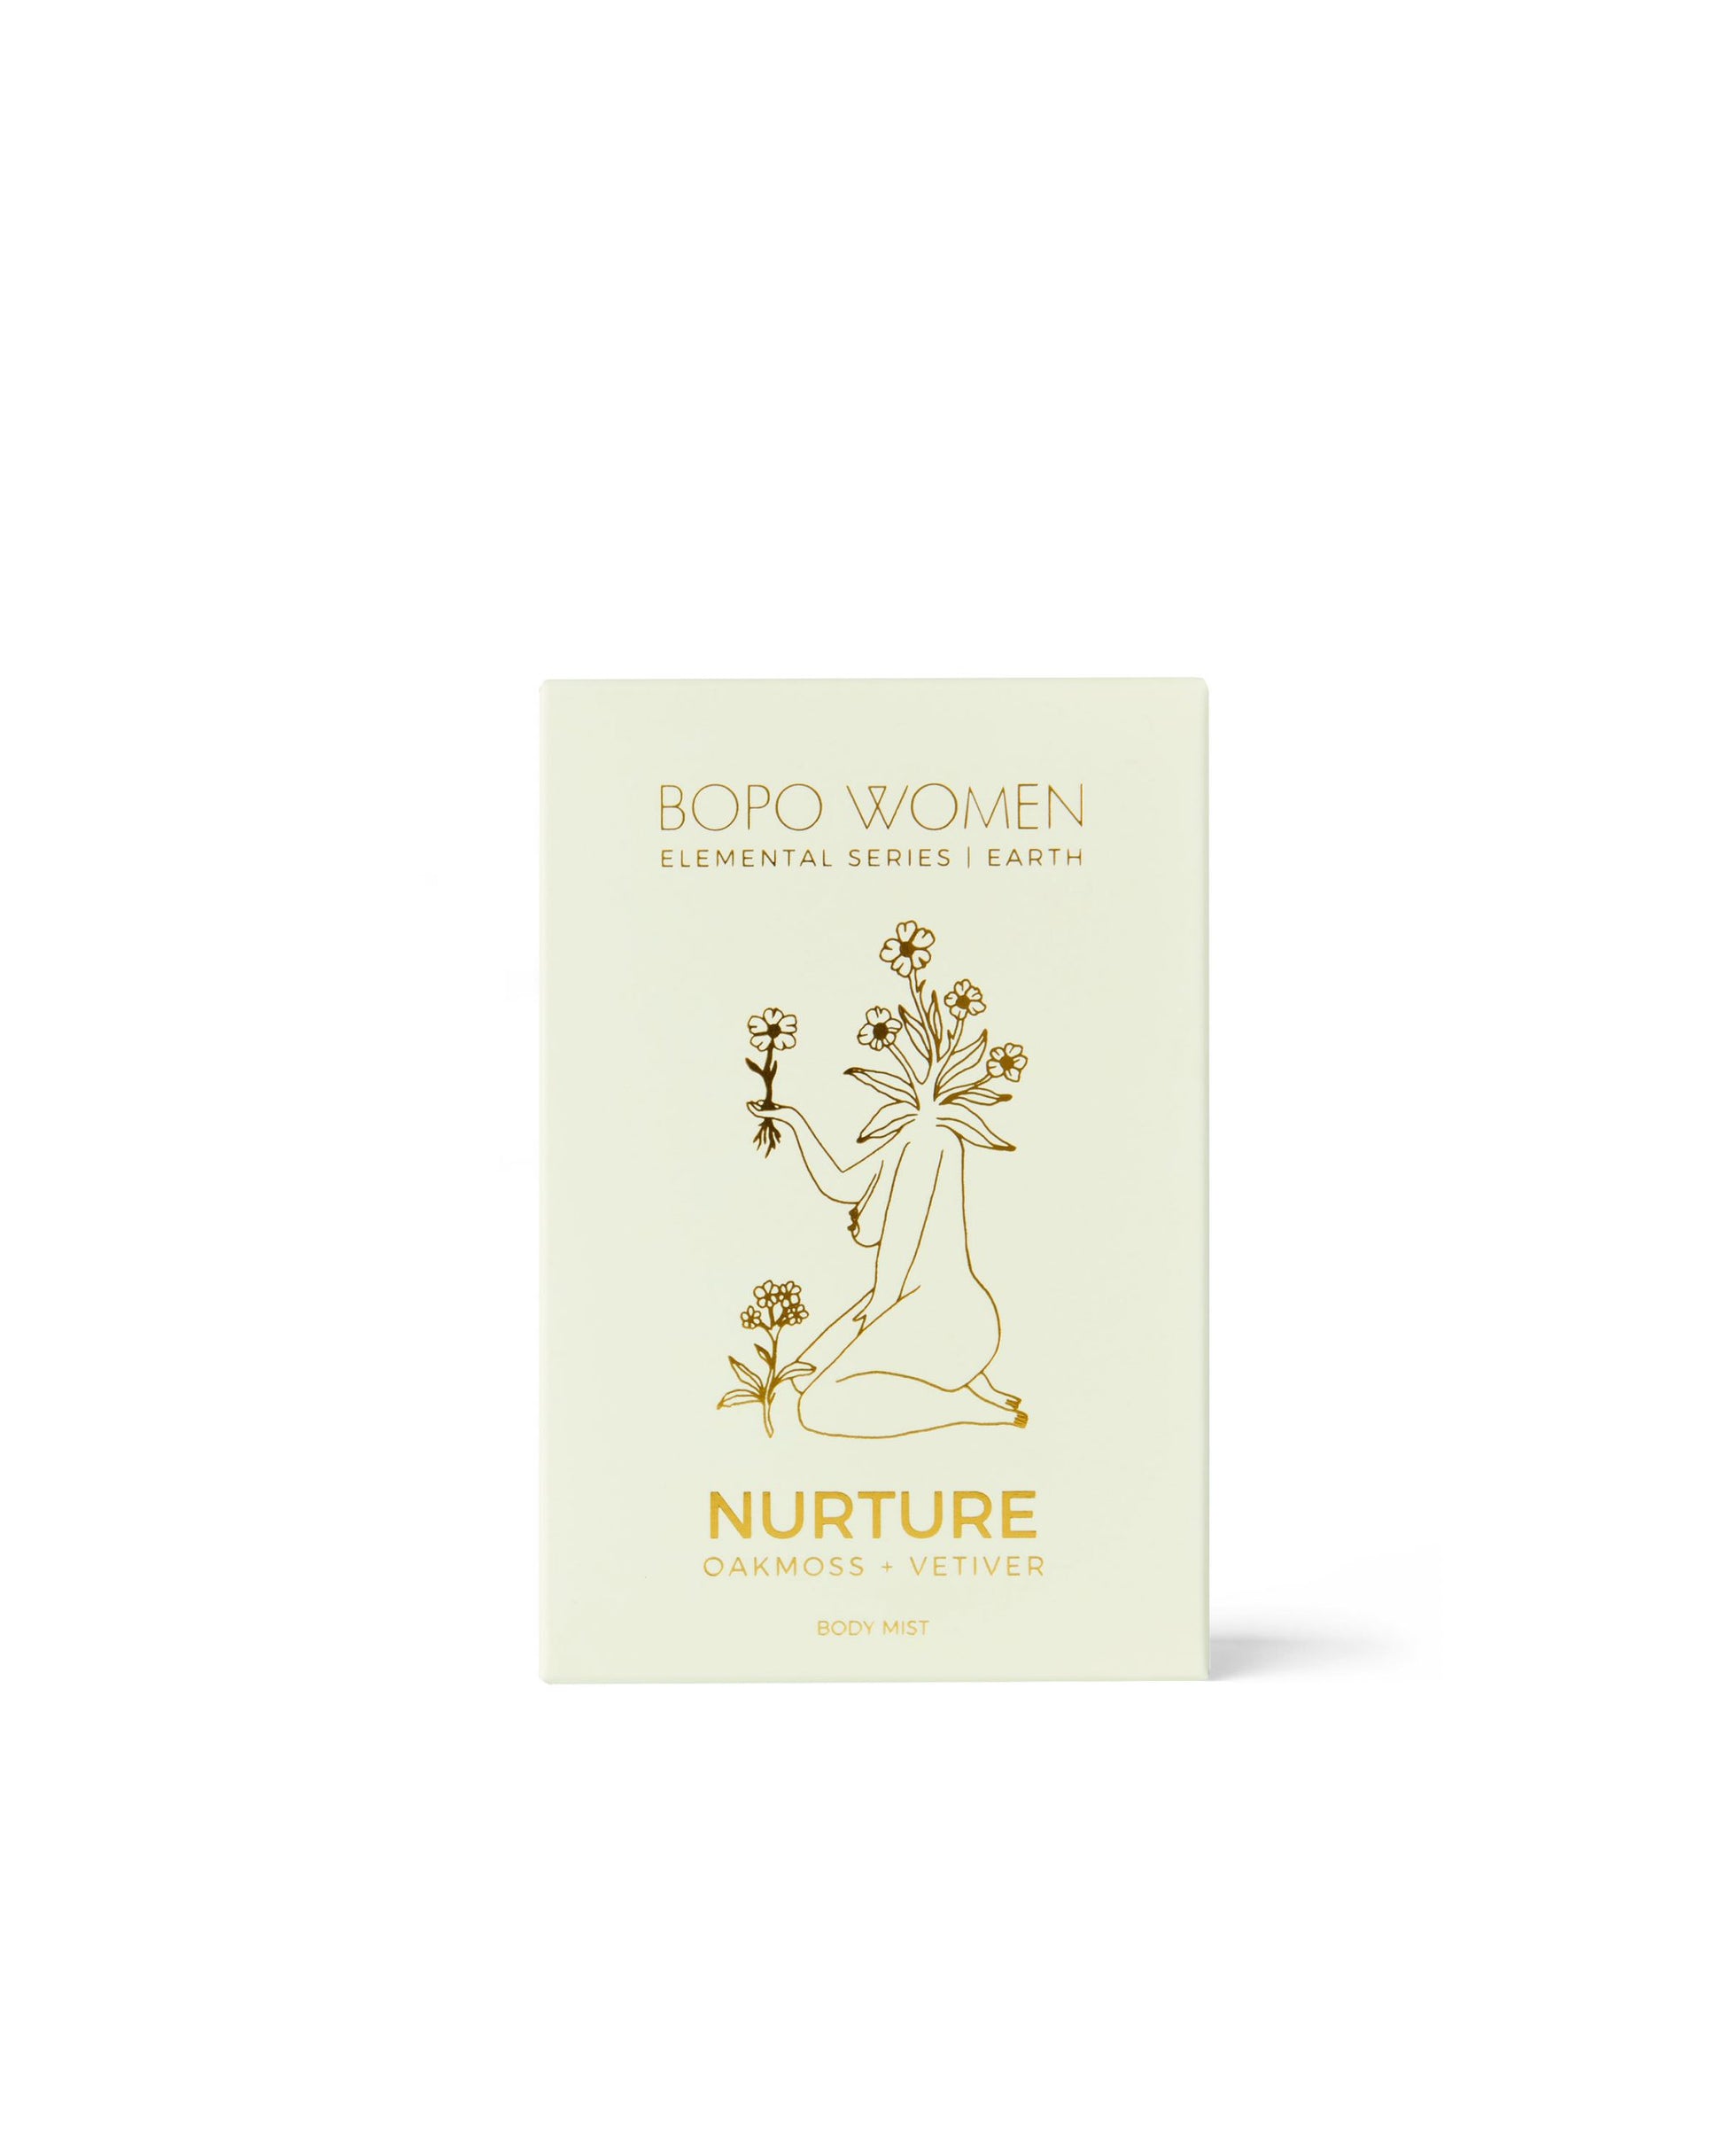 Bopo Women - Nurture Body Mist | The Ivy Plant Studio  | Body Mists | Perfume 